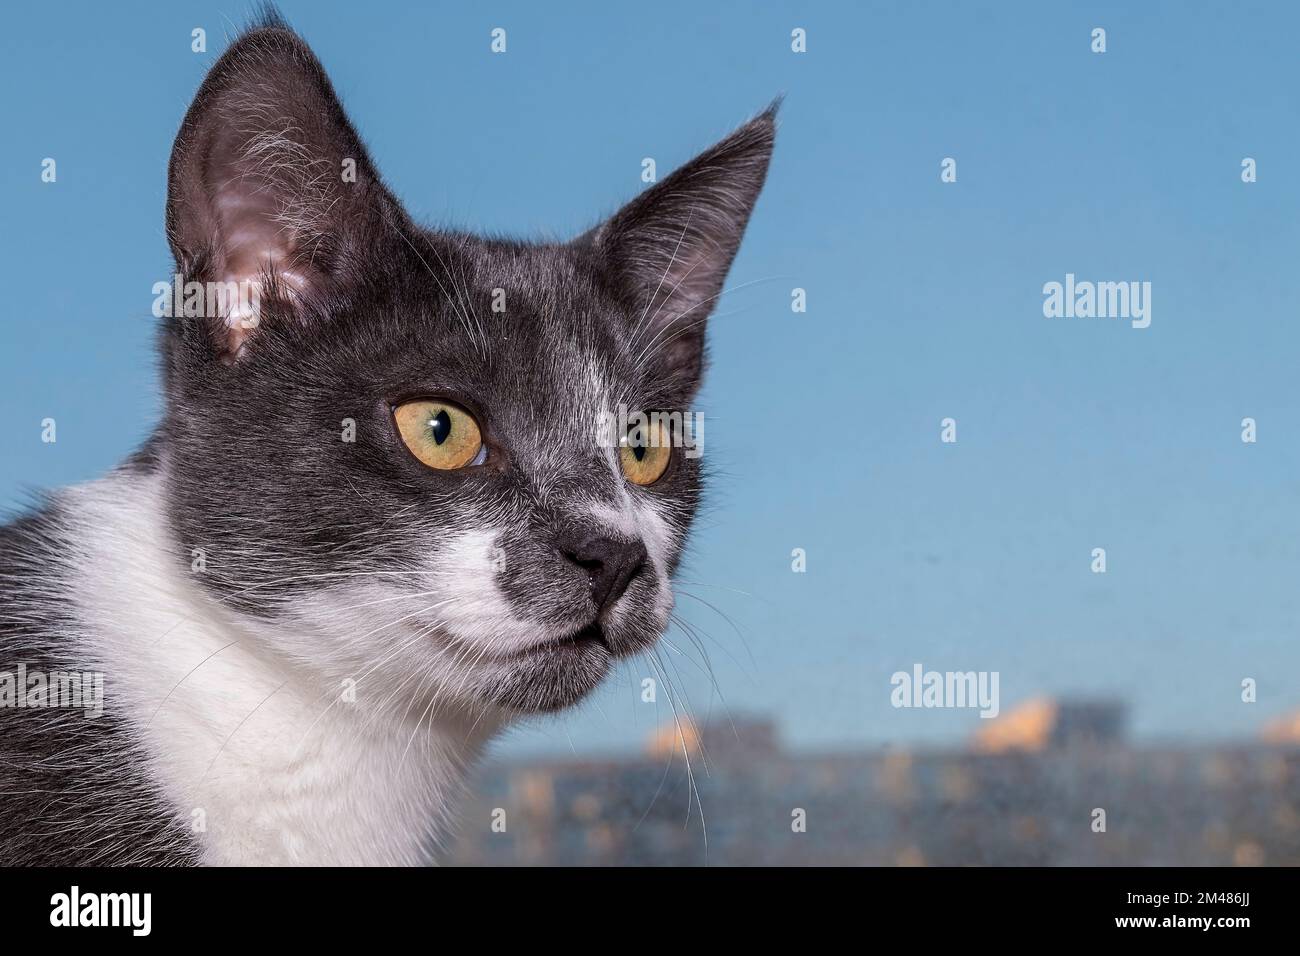 Cat portrait Stock Photo